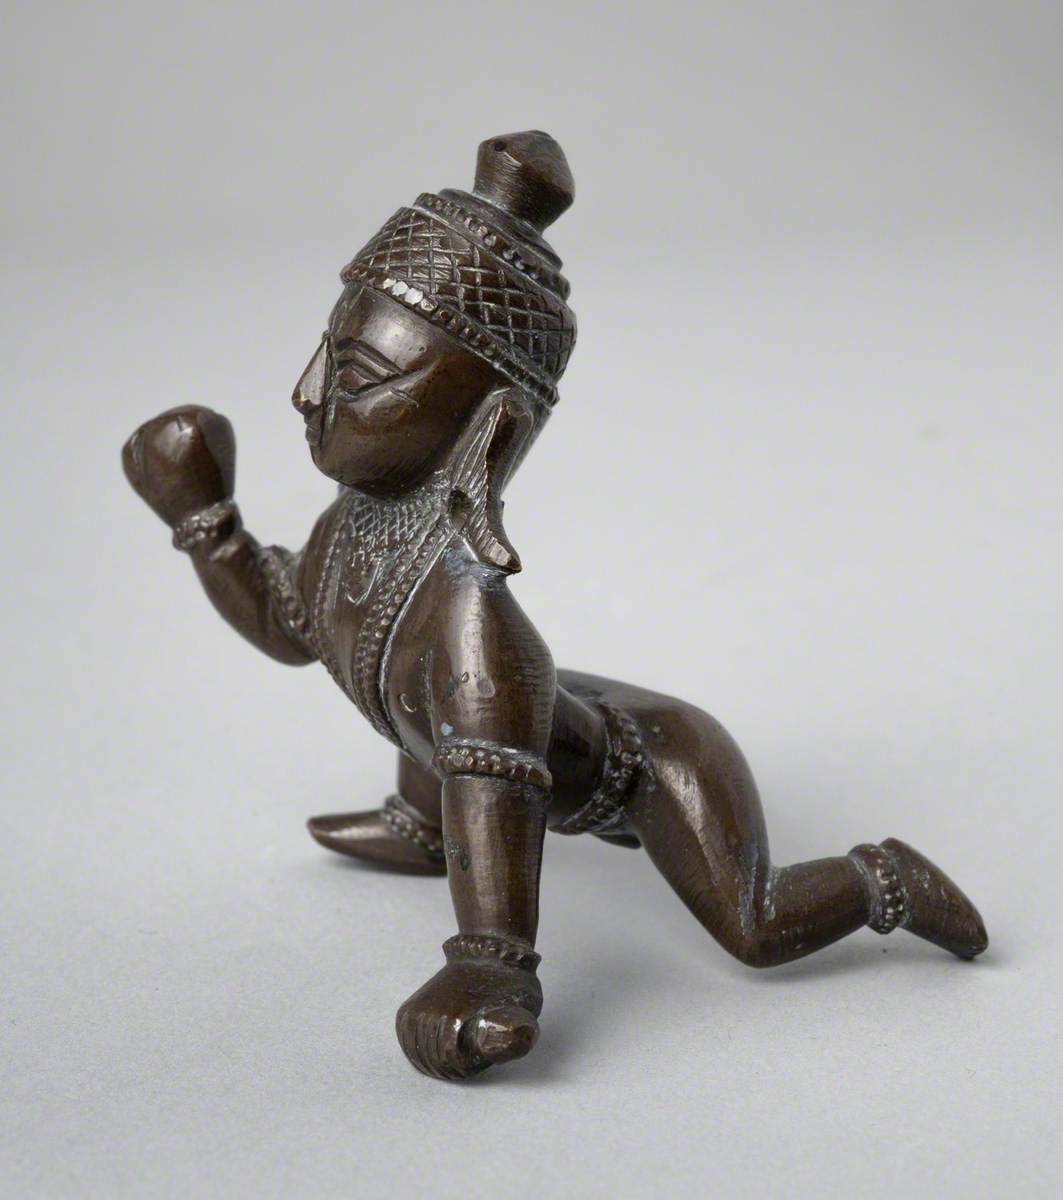 Bala Krishna Figure